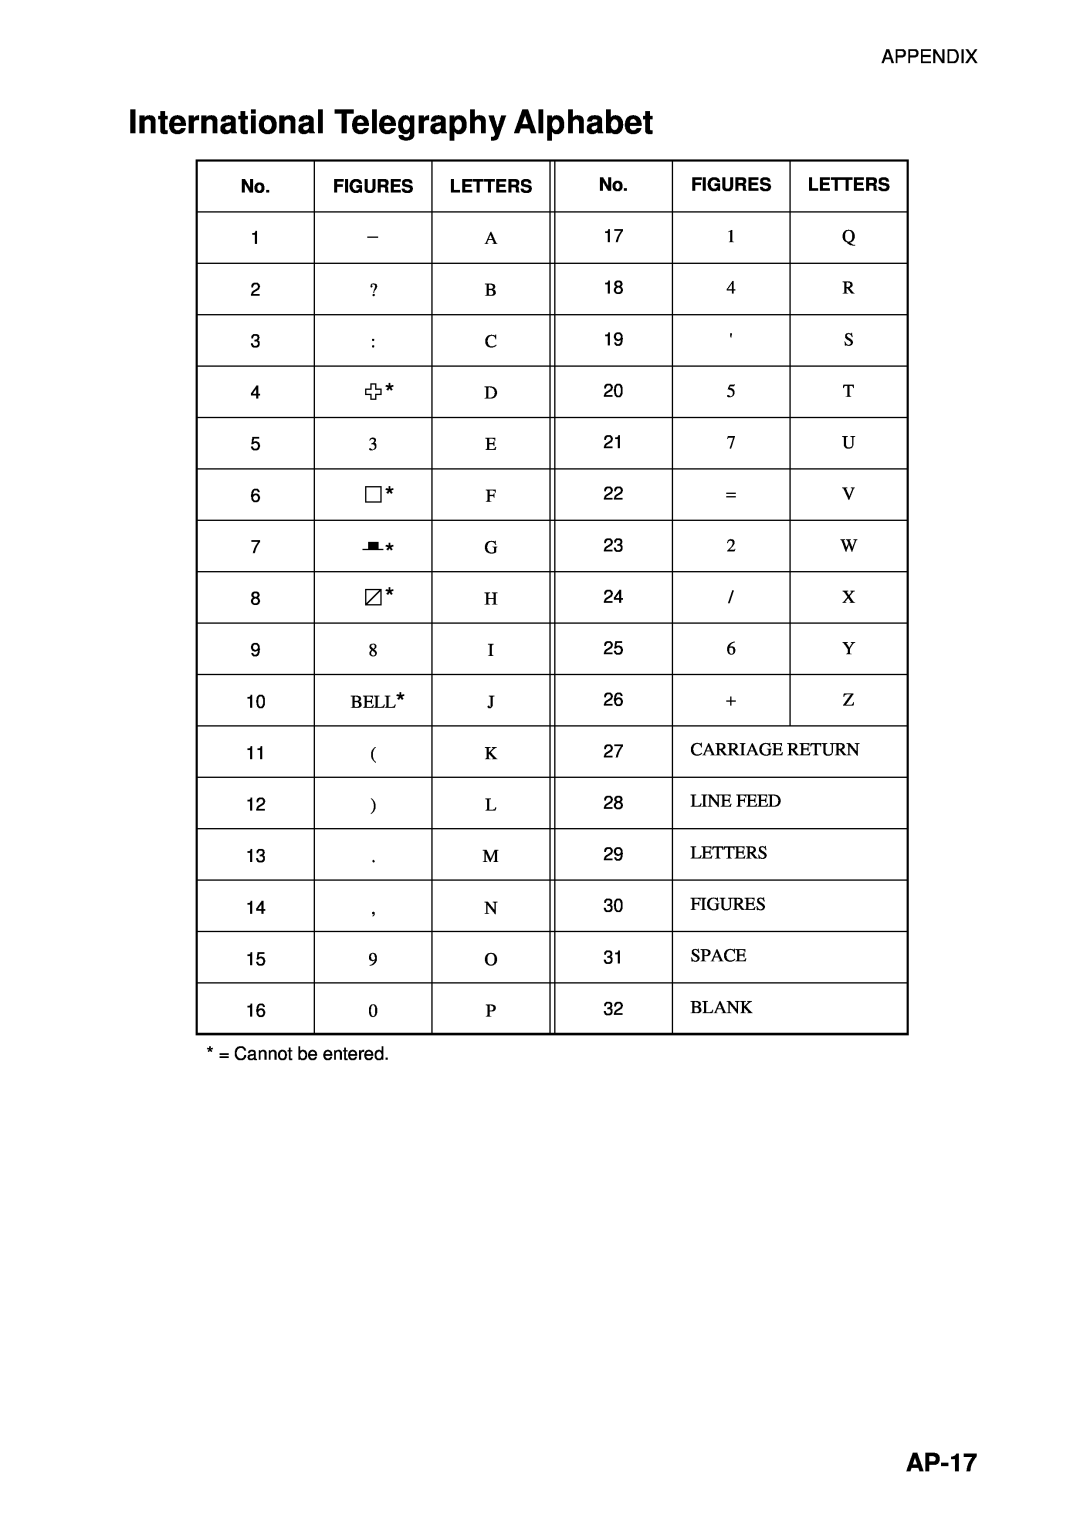 Furuno 16 manual International Telegraphy Alphabet, AP-17, Figures, Letters 